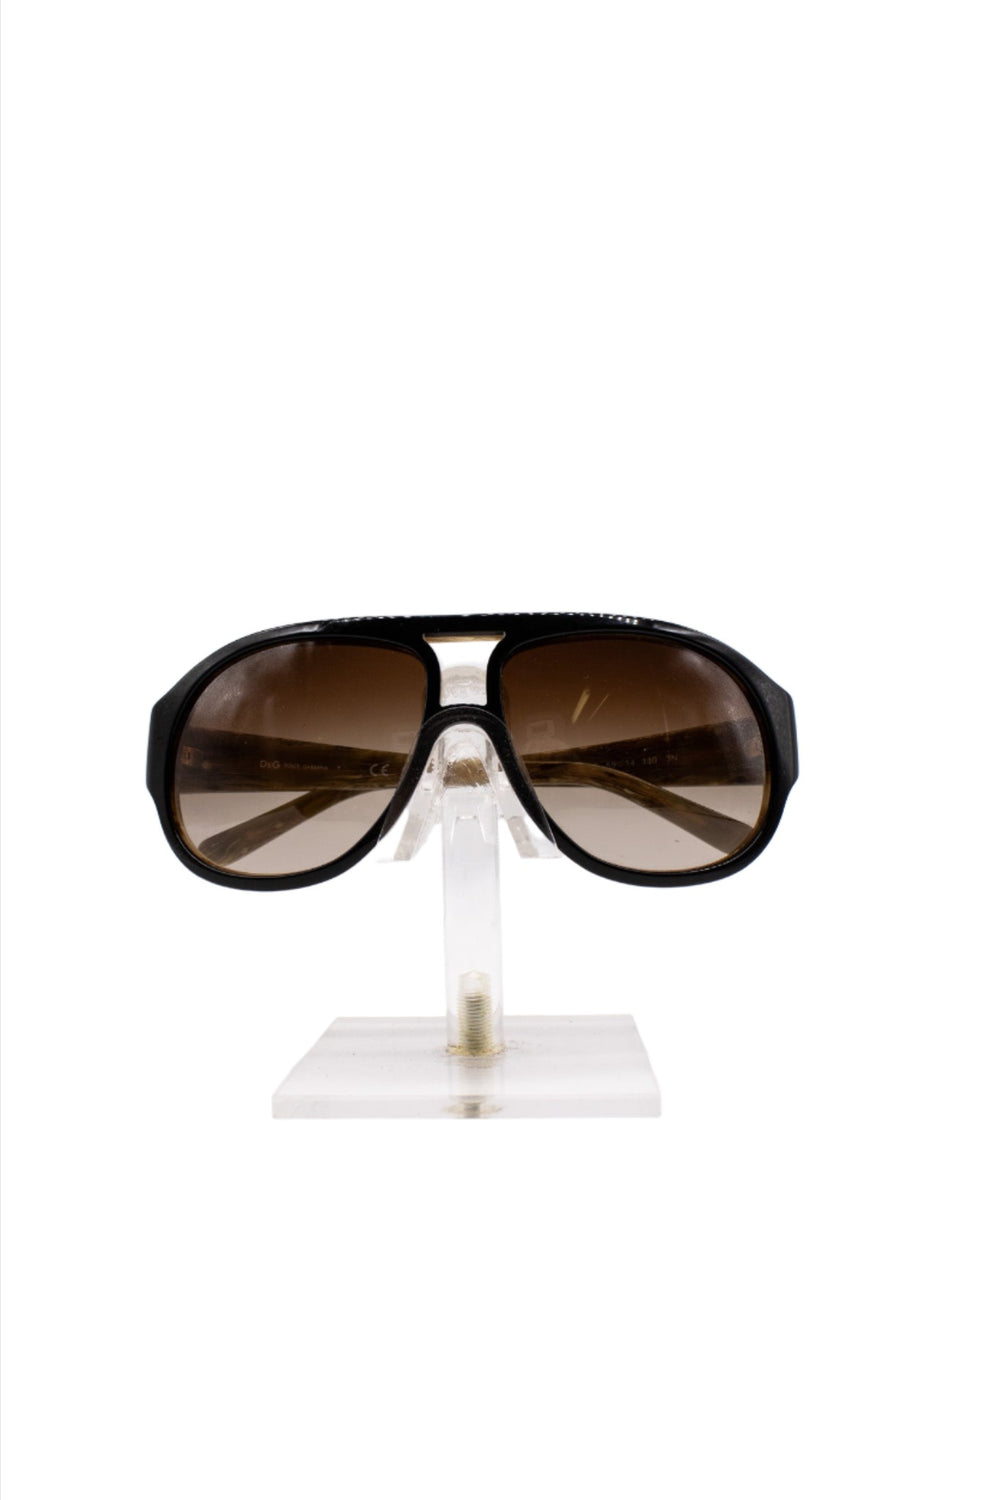 Dolce & Gabbana Brown Sunglasses w/ Brown Gradient Lens - Mens Unisex